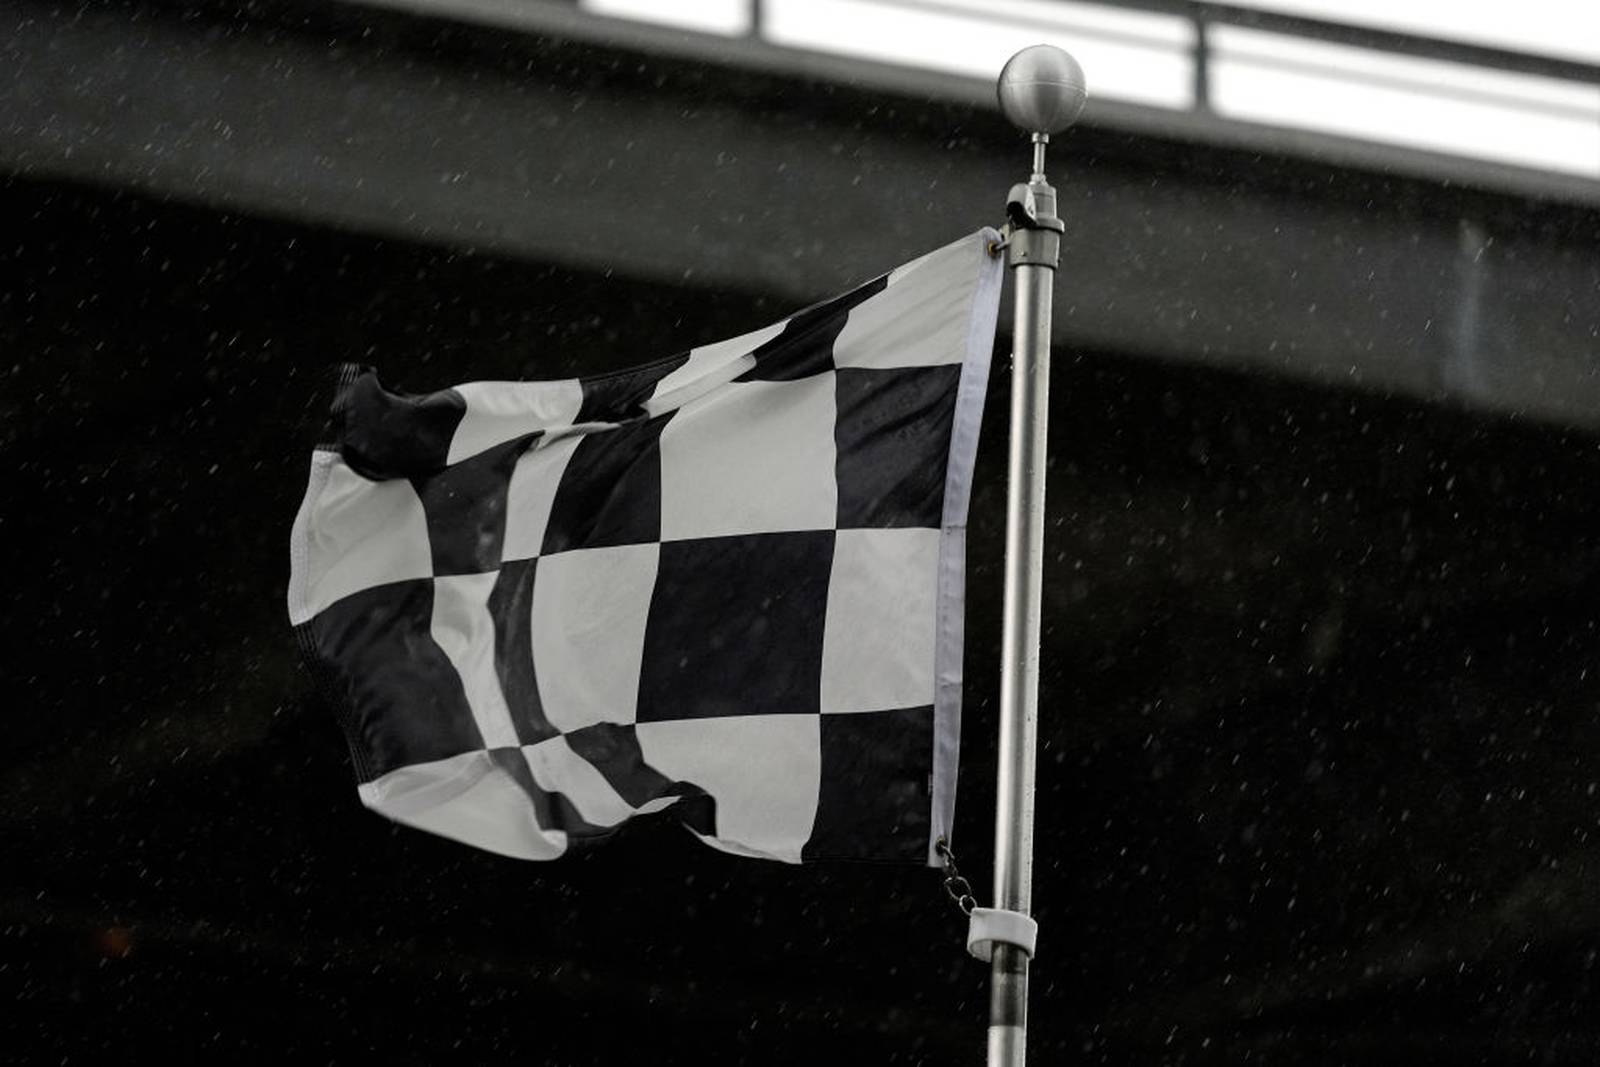 Indianapolis 500 Josef Newgarden wins crashfilled race at Brickyard